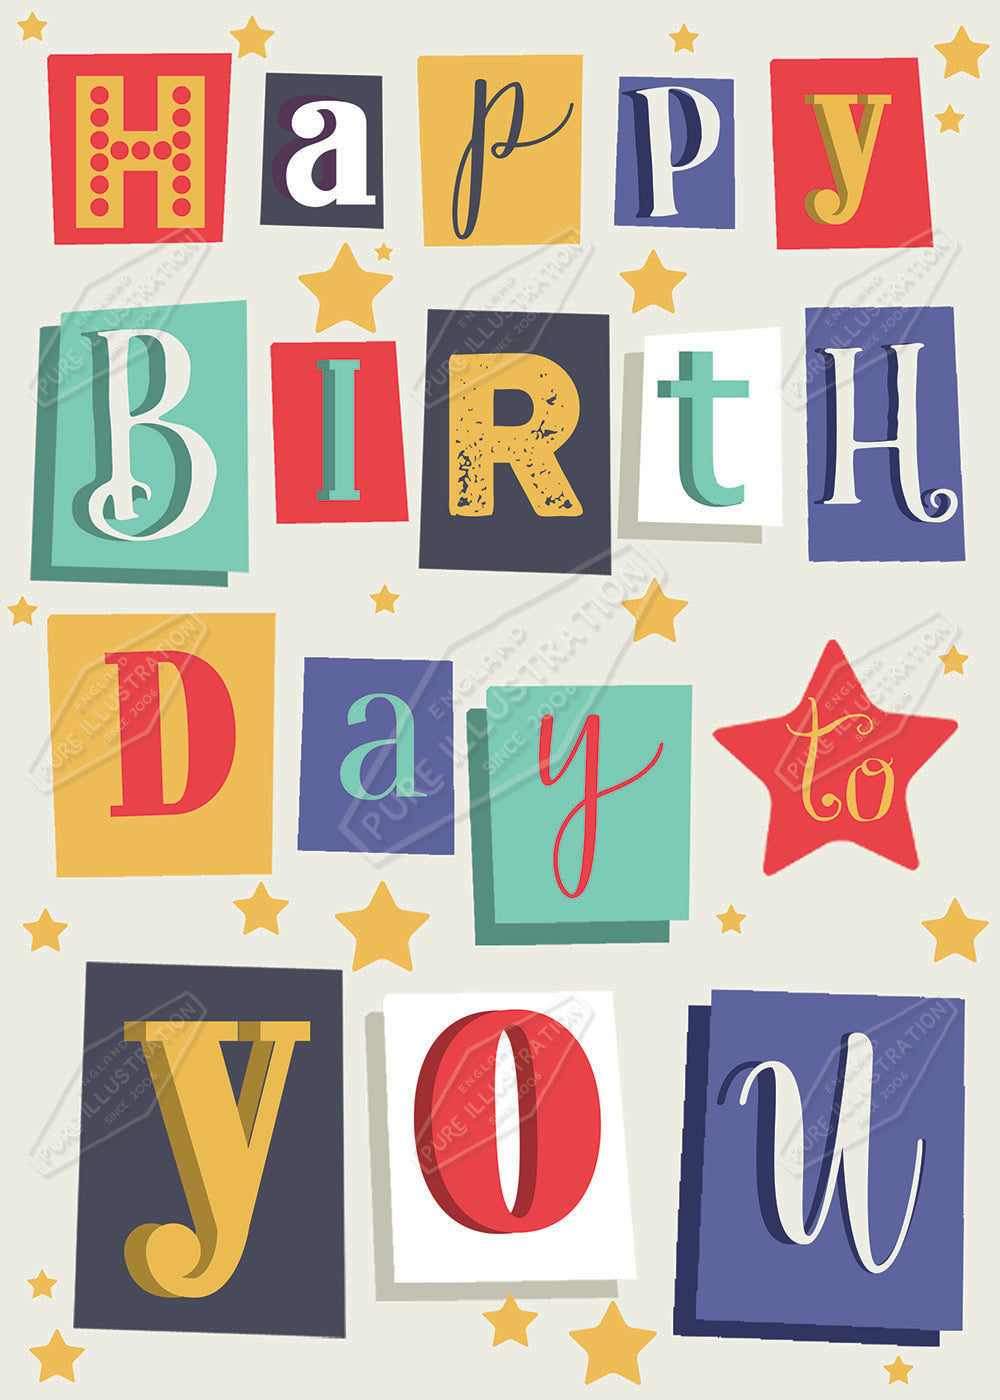 00029452DEV - Deva Evans is represented by Pure Art Licensing Agency - Birthday Greeting Card Design